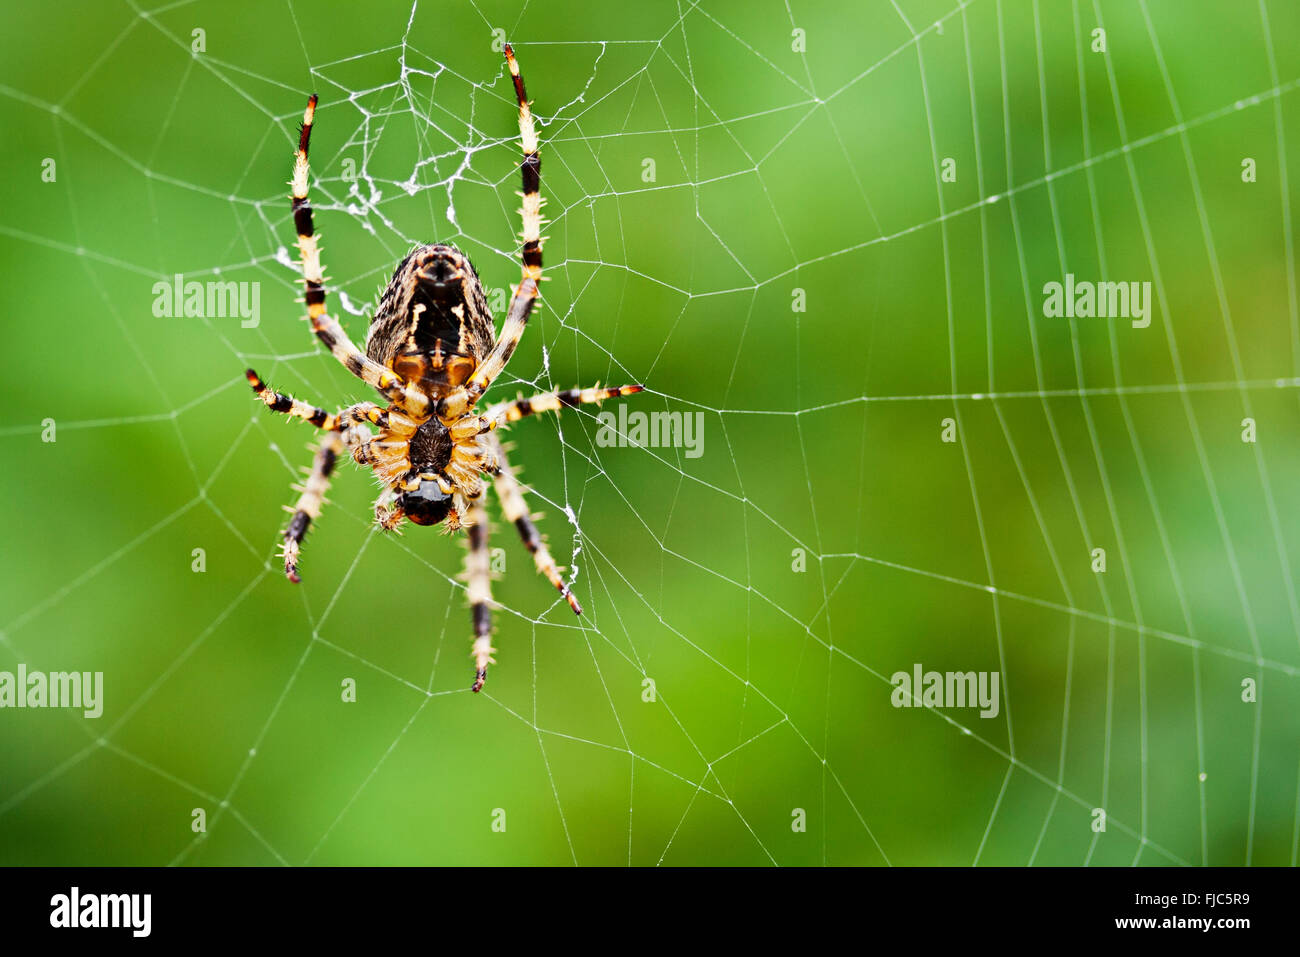 Spider (Garden or Araneus diadematus) underside on web with soft focus green background. Landscape format macro close up. Stock Photo